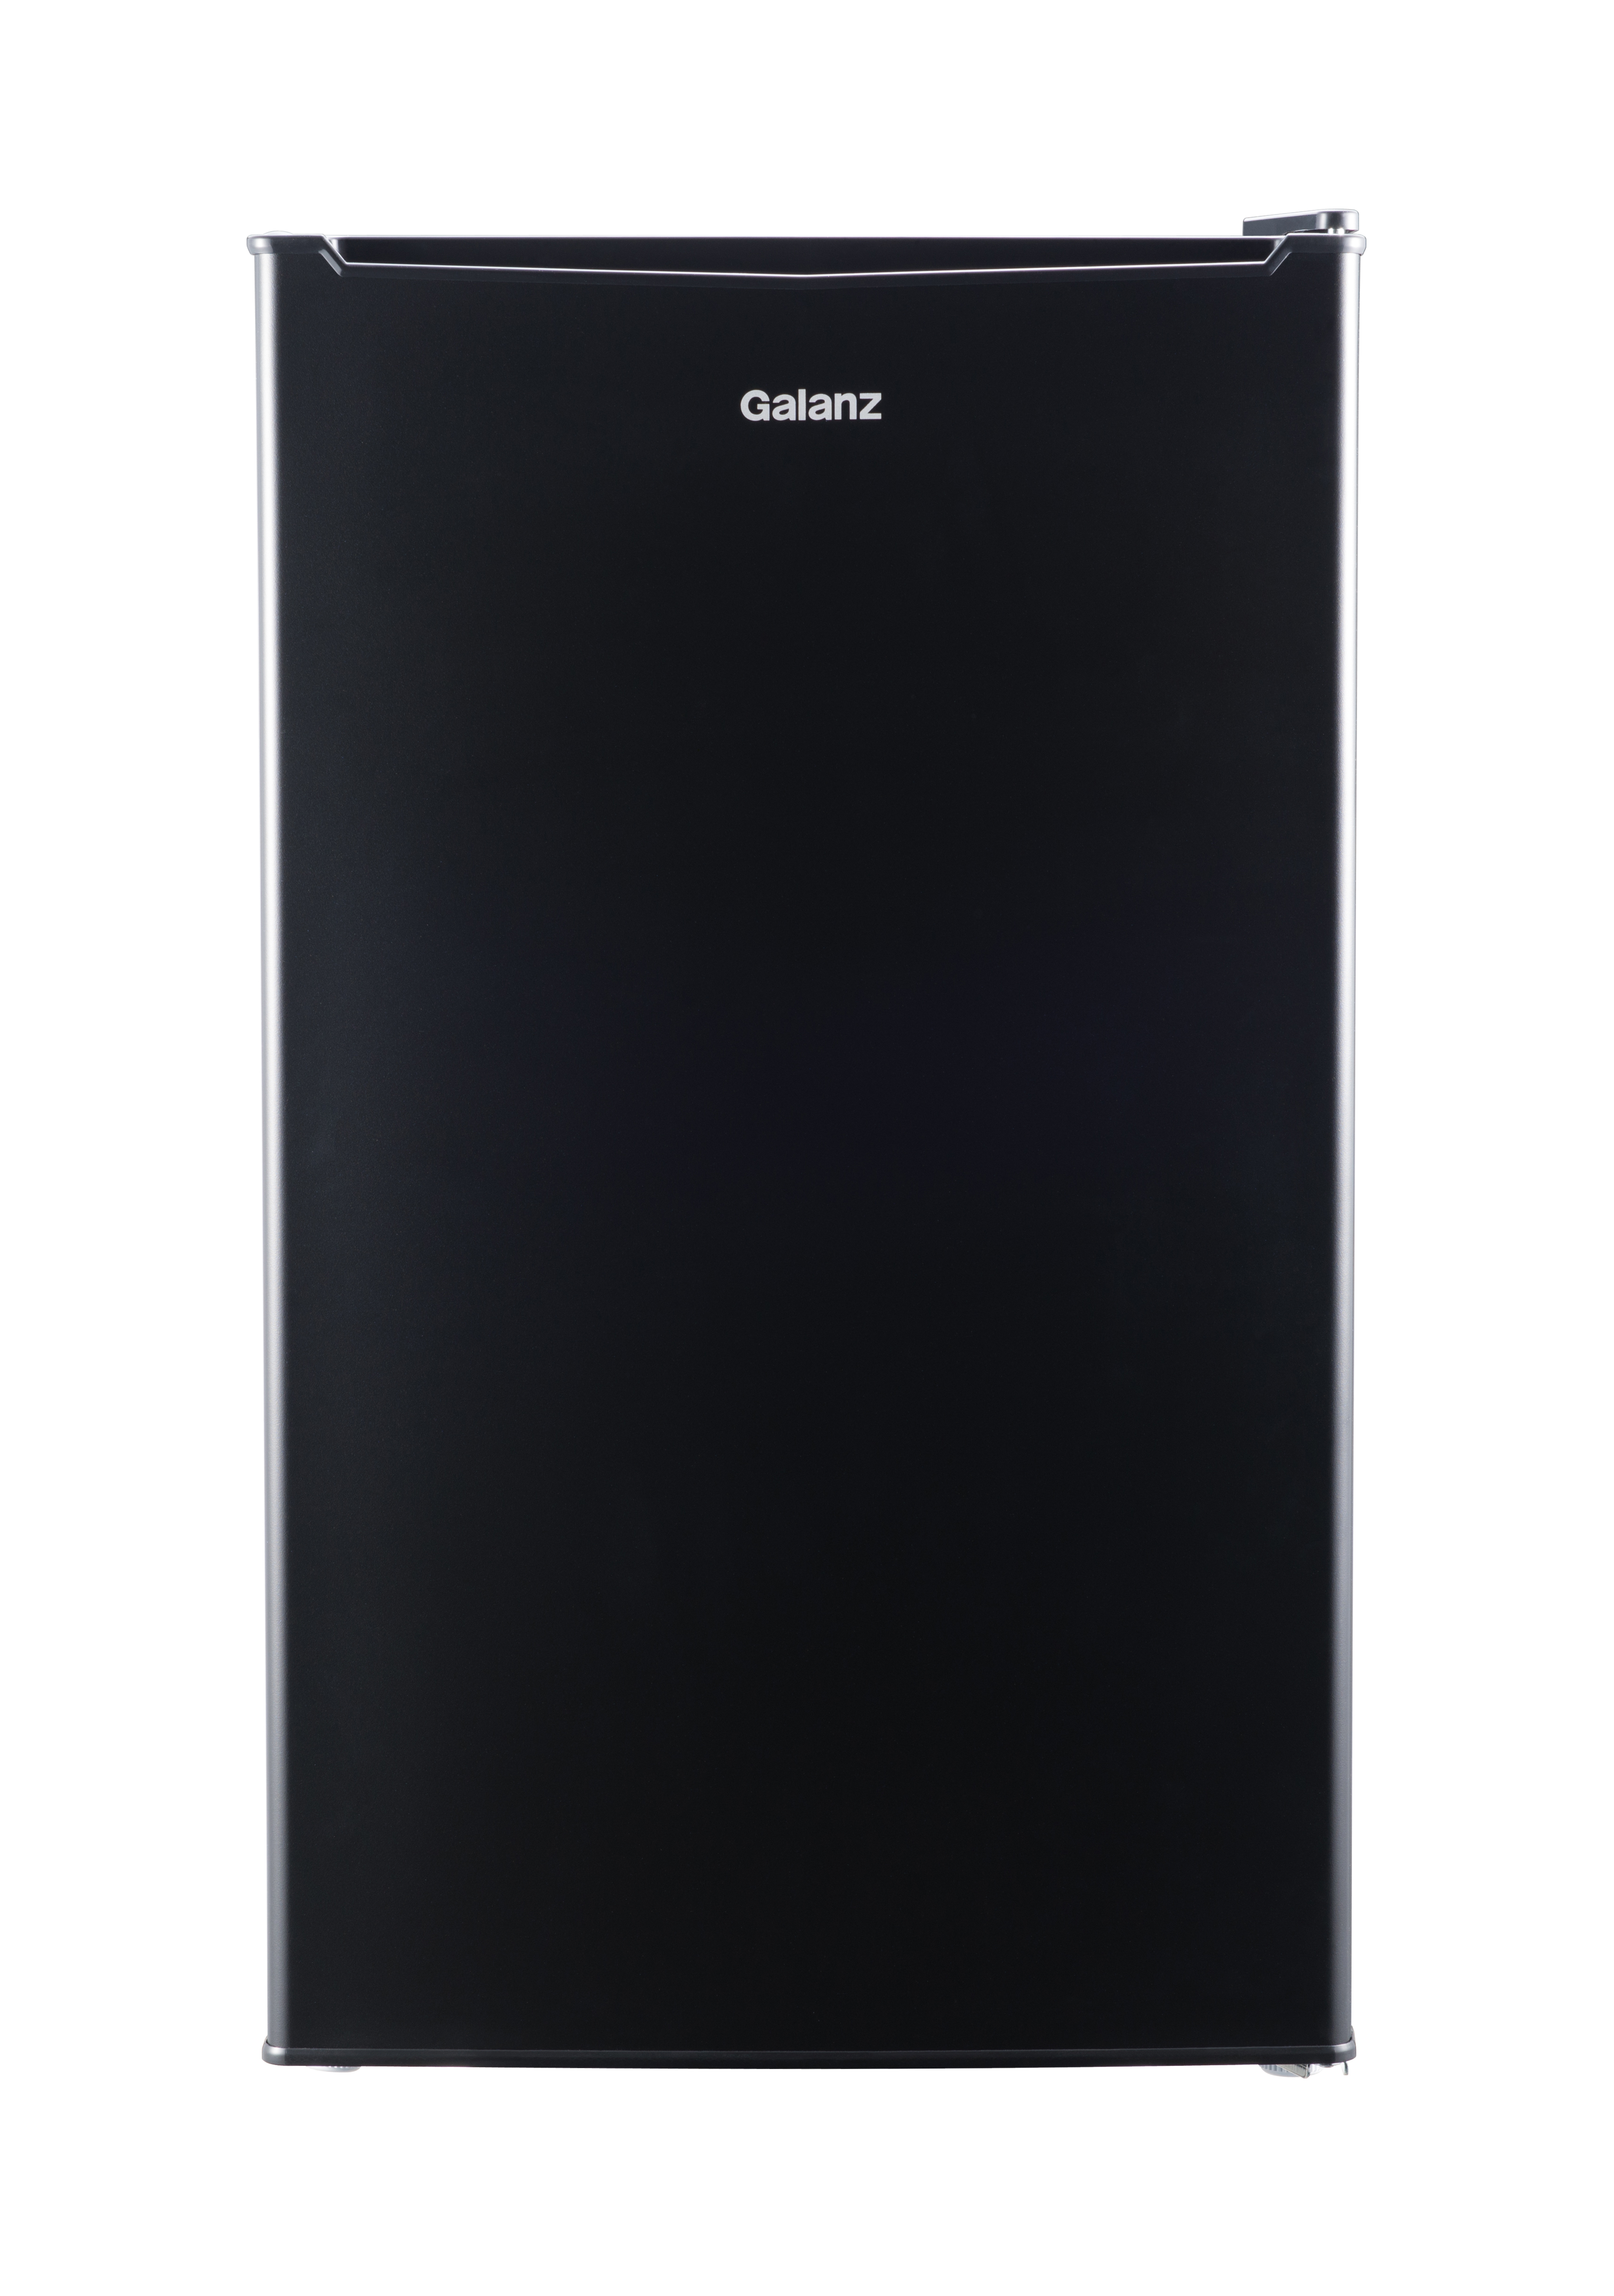 Galanz 3.3 Cu ft Single Door Mini Fridge, Black Estar - image 1 of 7